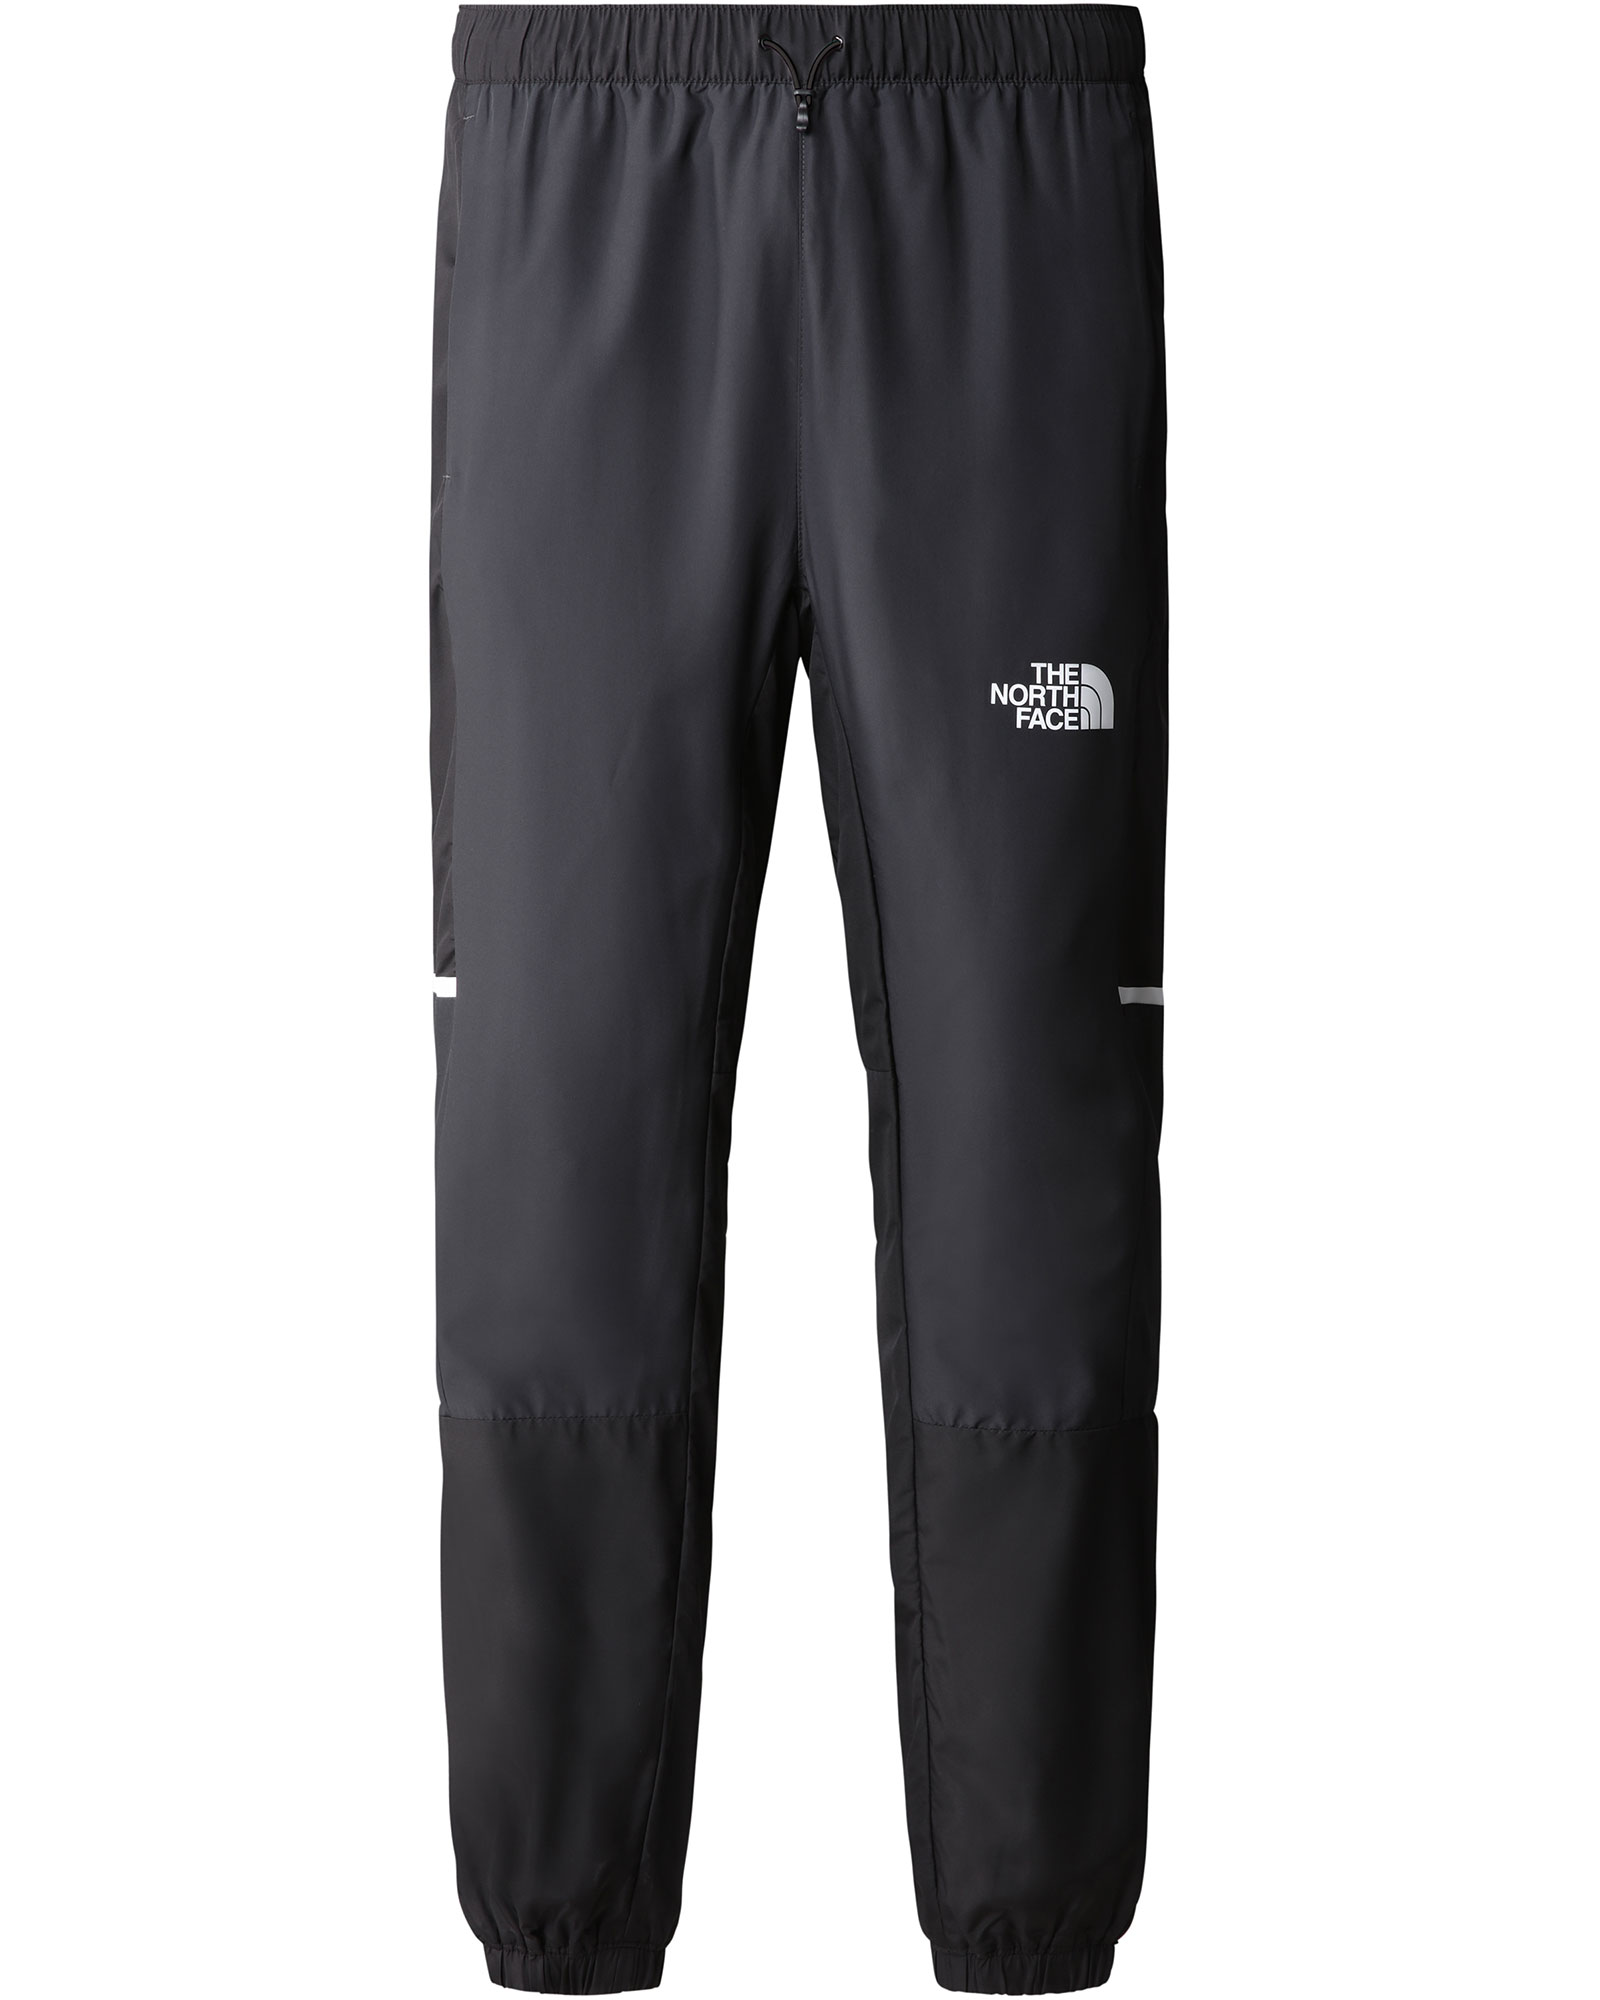 The North Face Men’s MA Wind Pants - TNF Black/Asphalt Grey XL